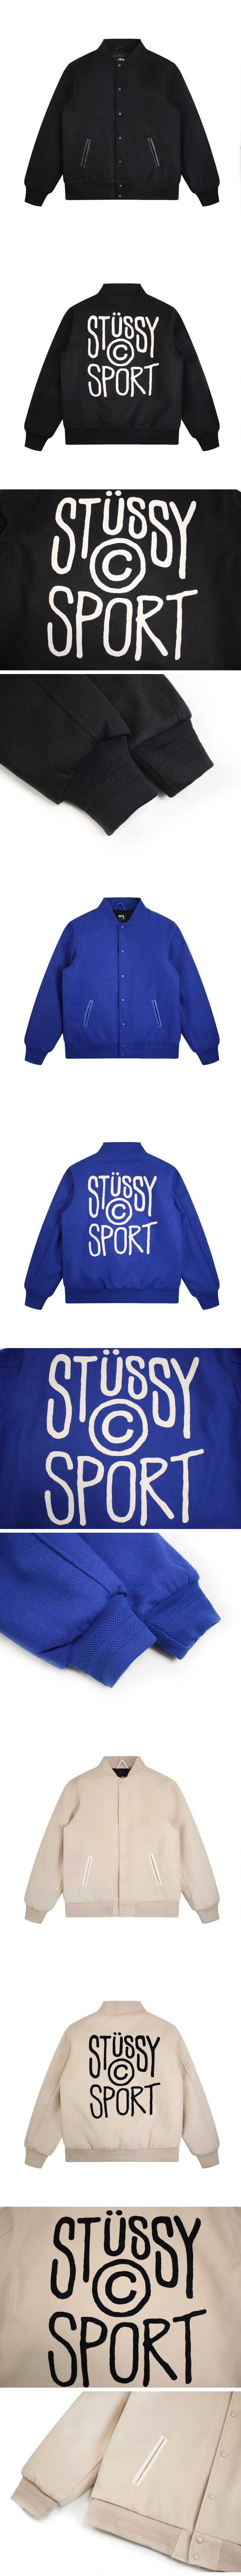 Stussy Sport Bomber Jacket ステューシー スポーツ ボンバージャケット